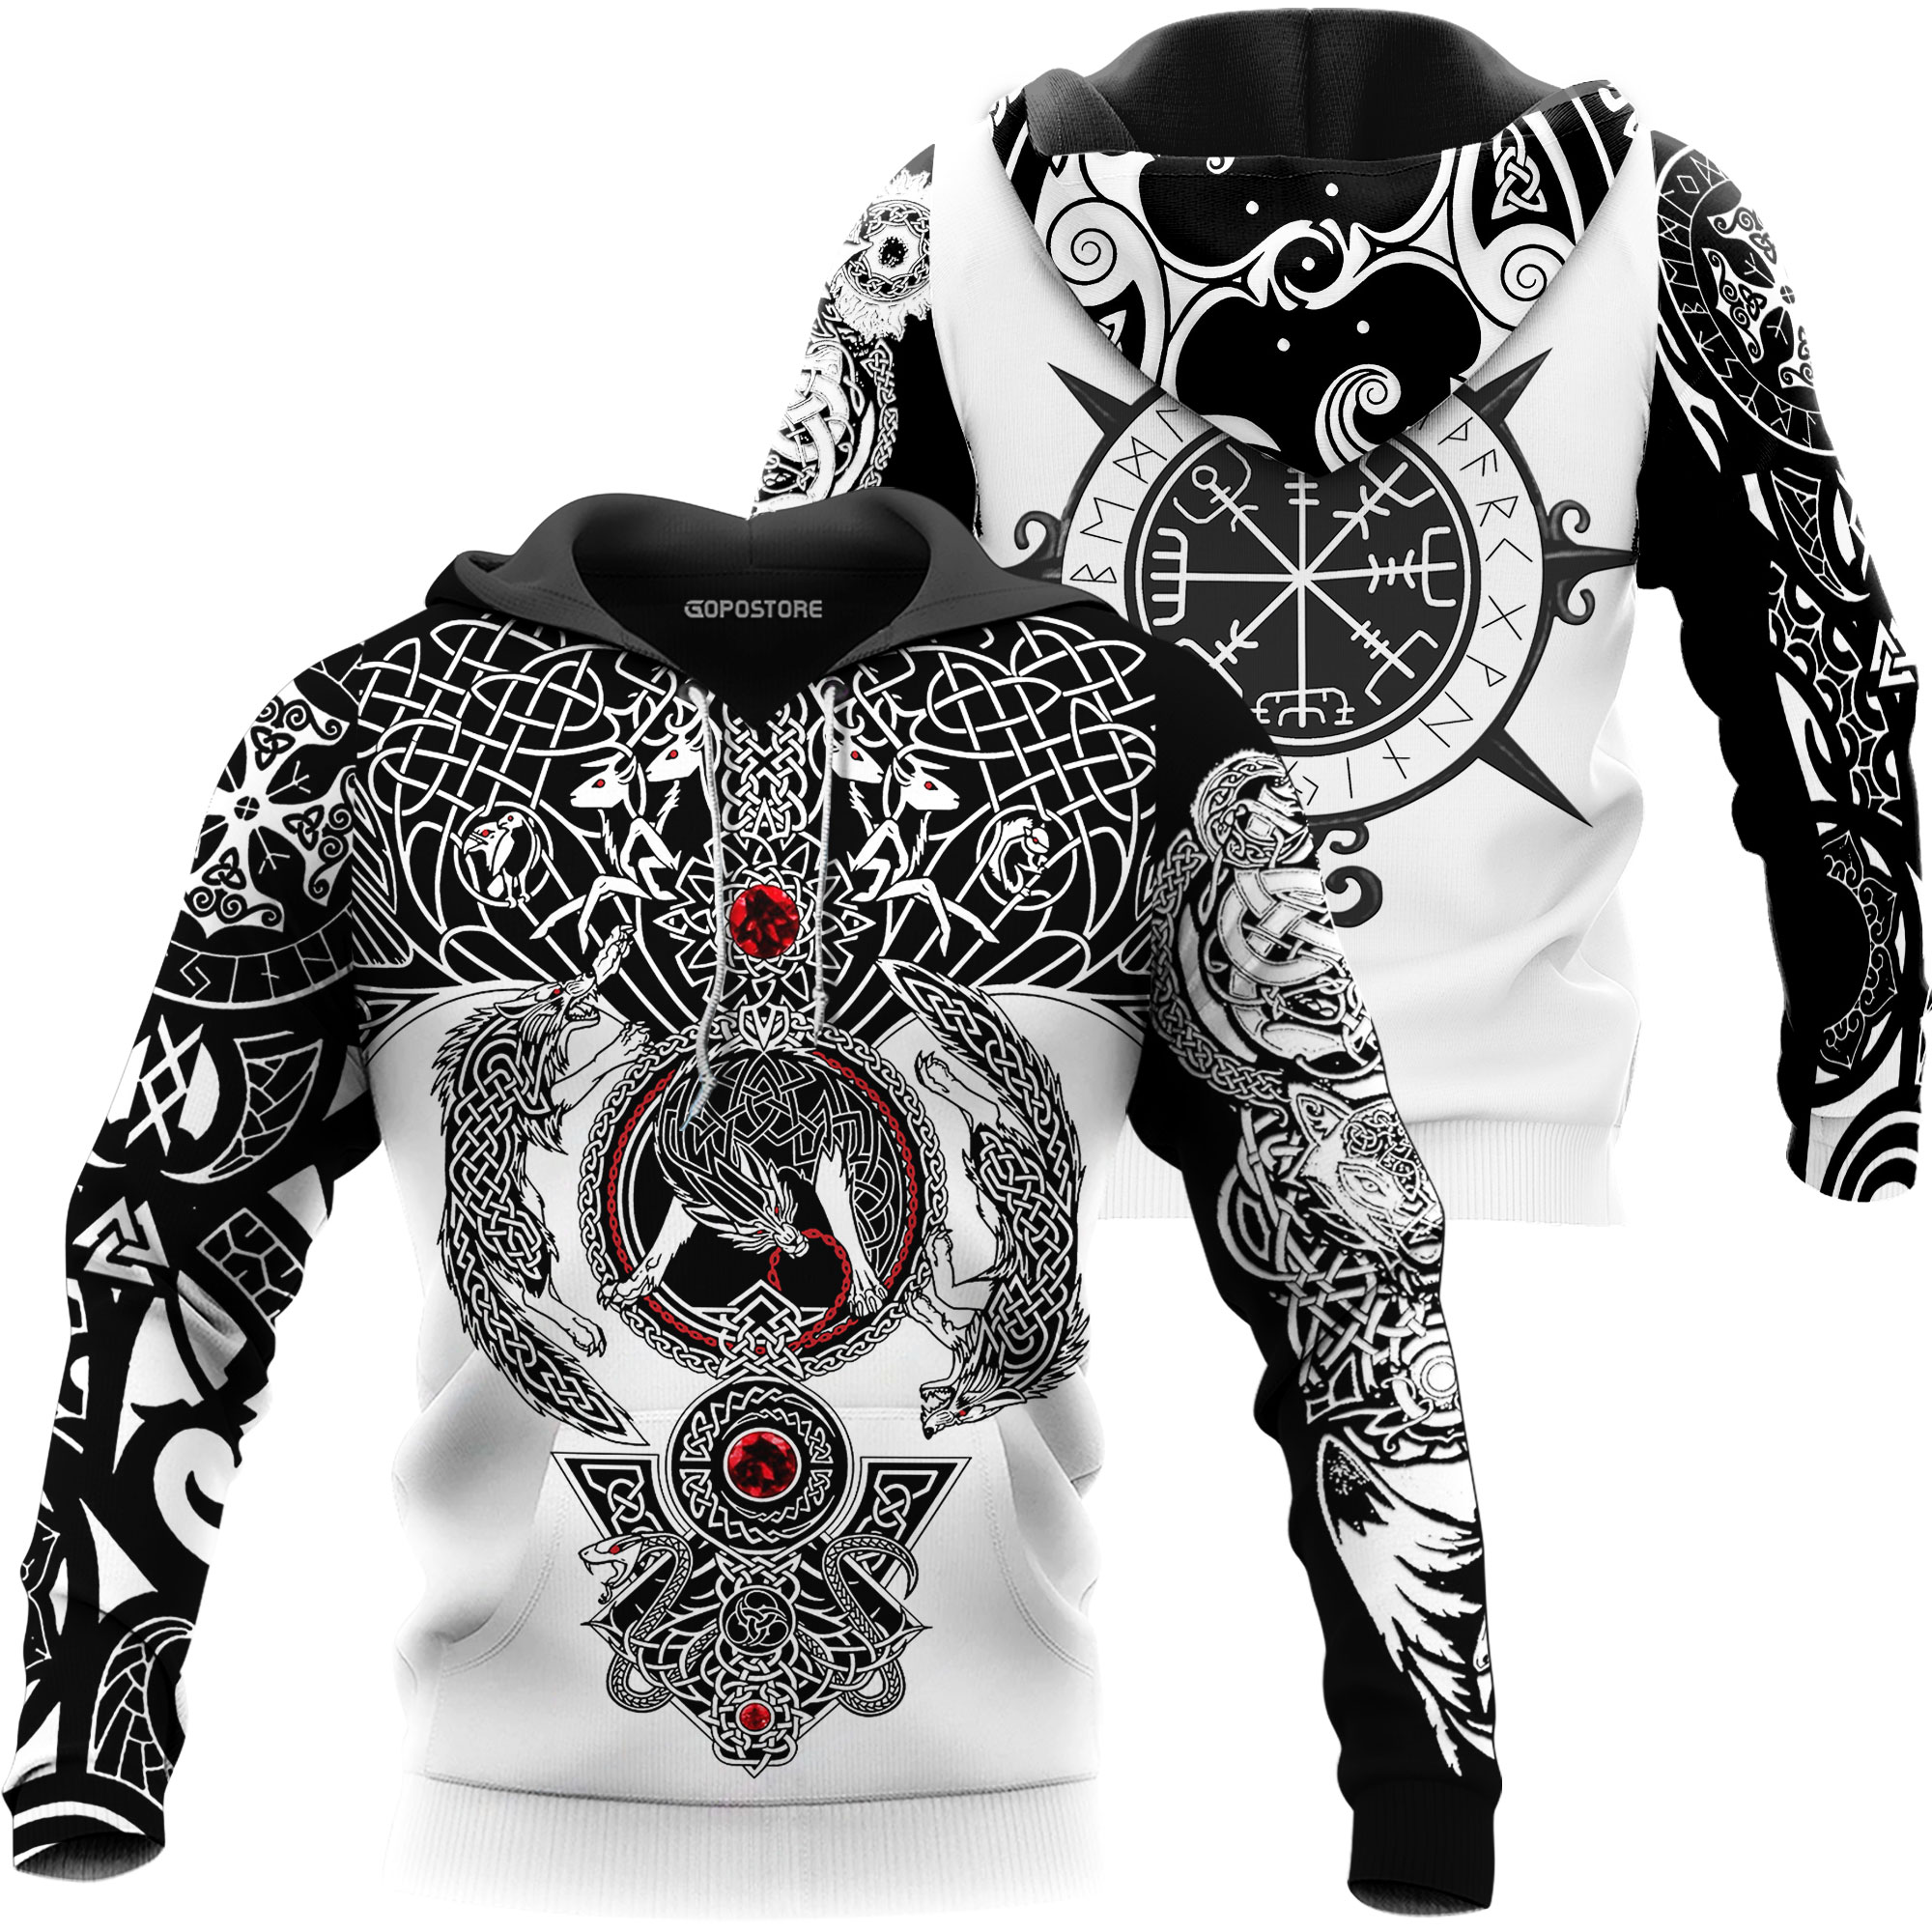 The viking wolf tattoo art 3d full printing hoodie